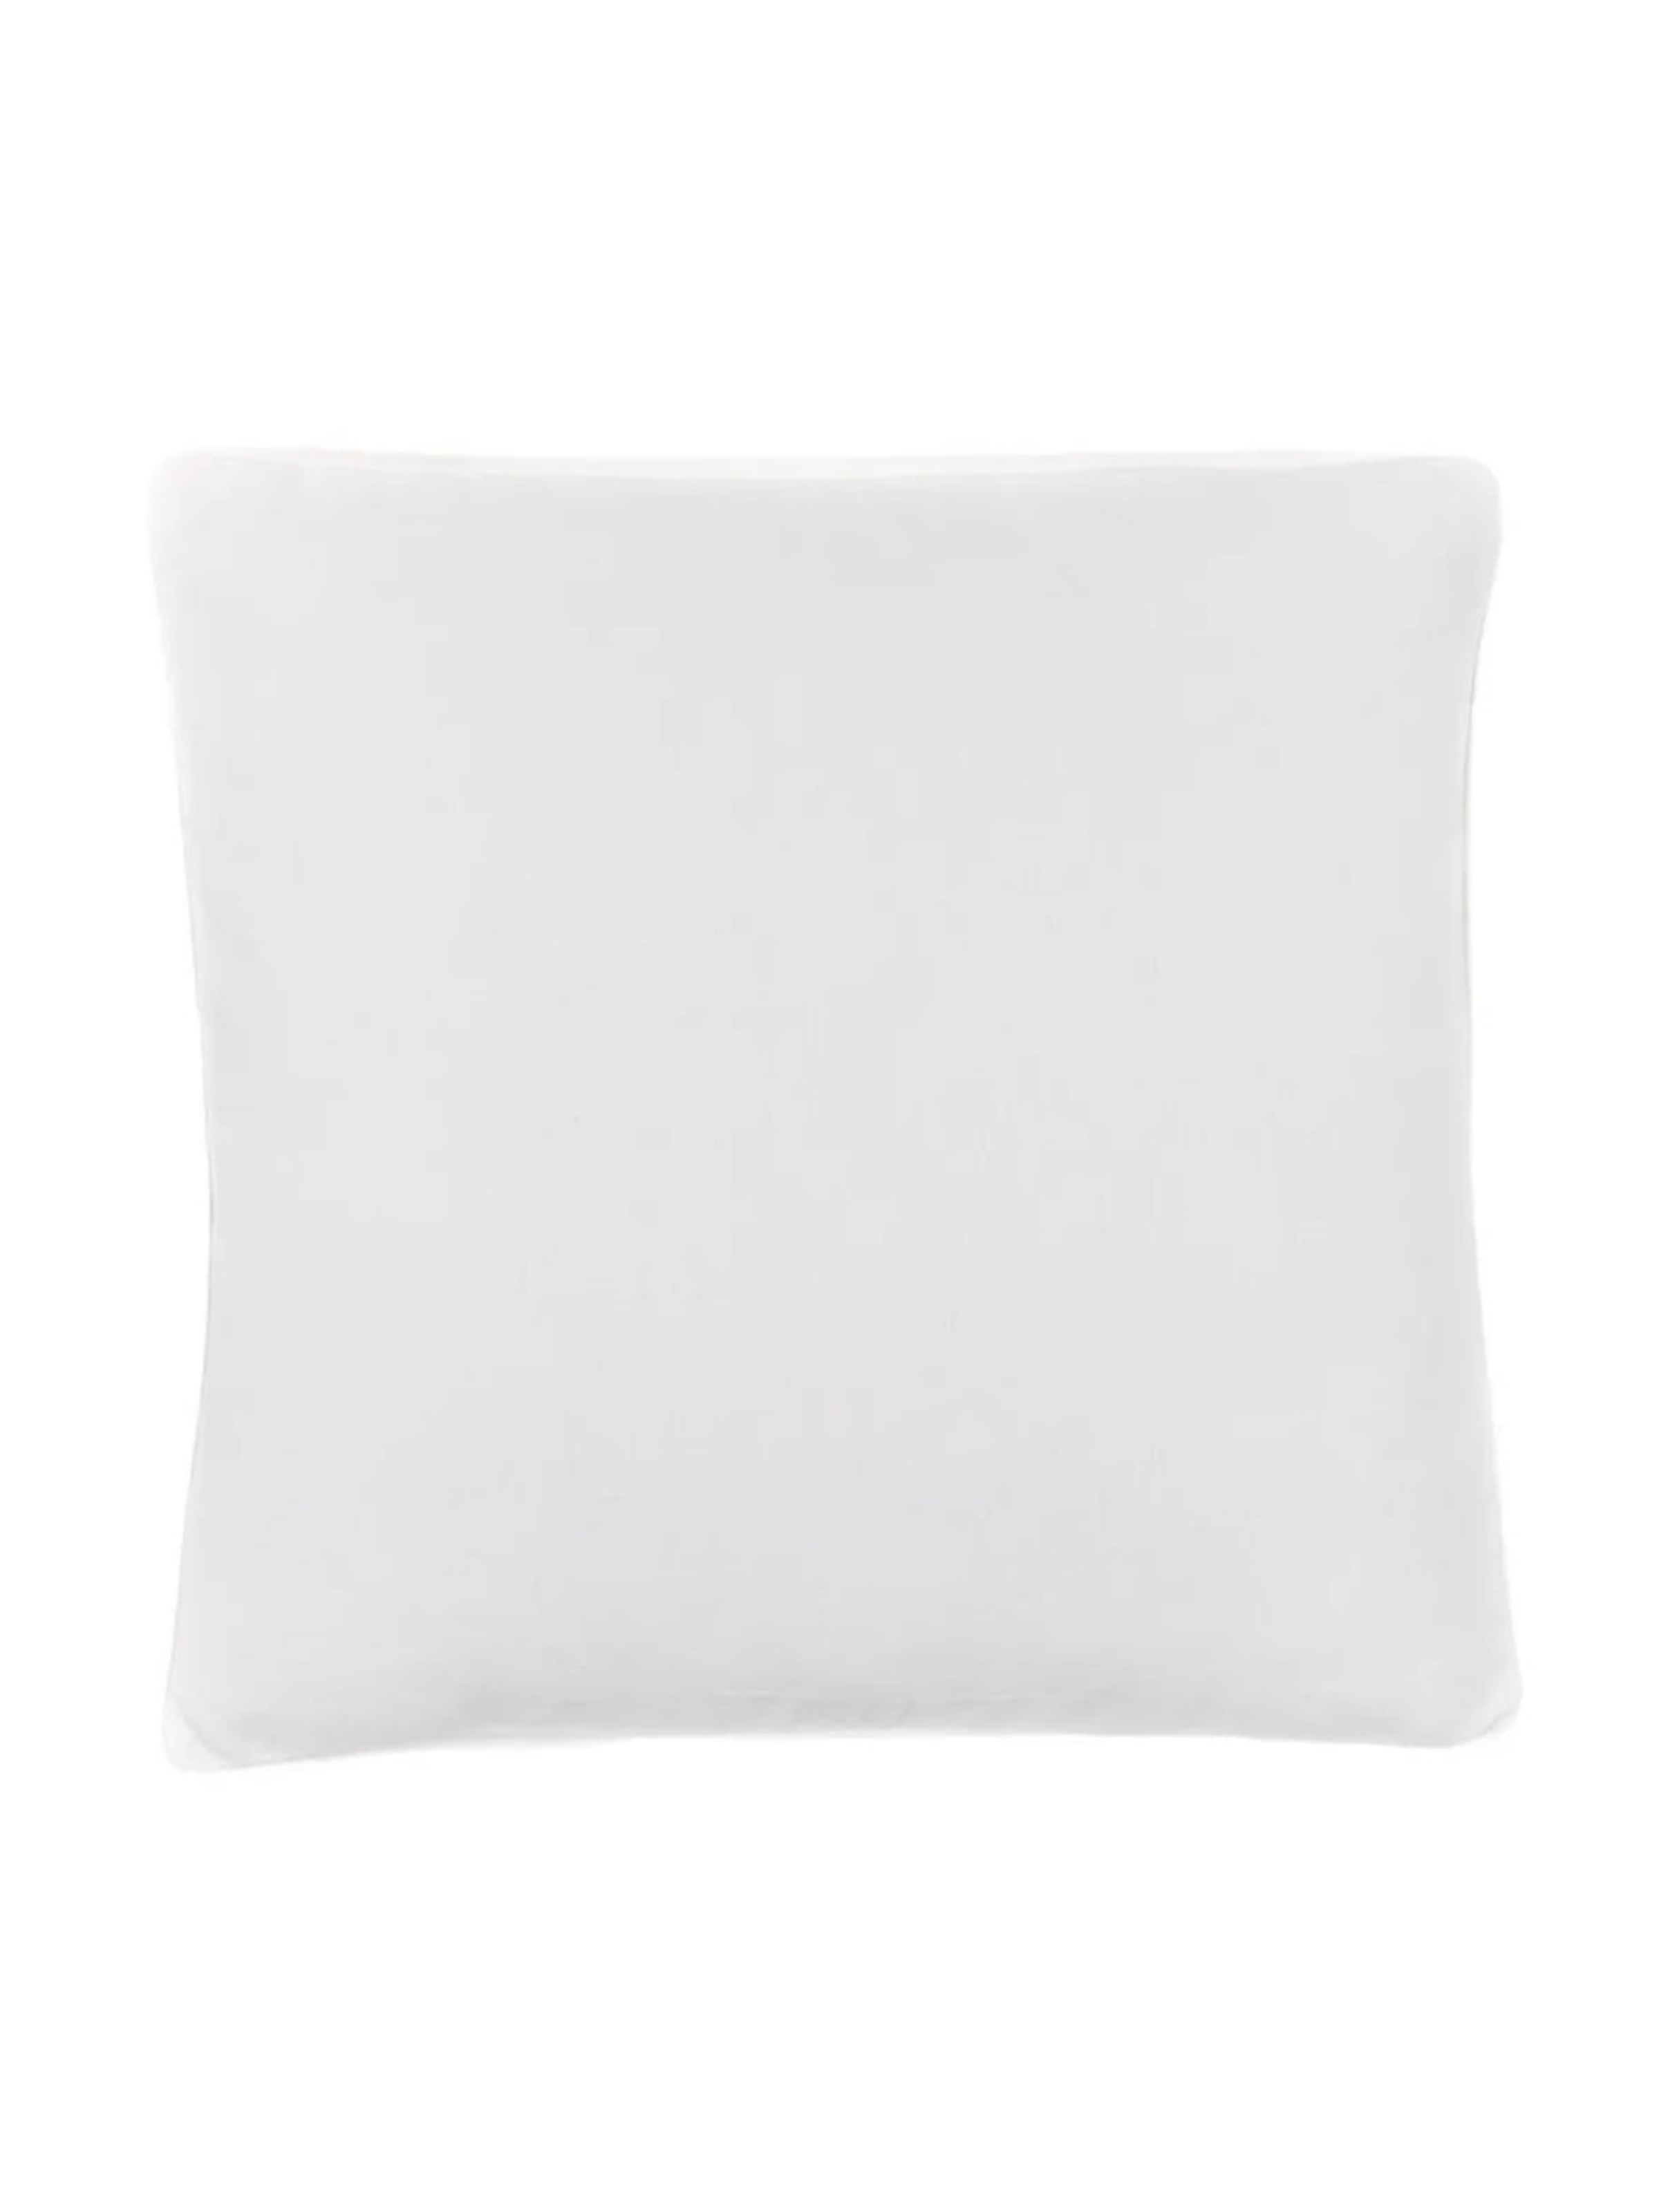 White Linen Cotton Pillow